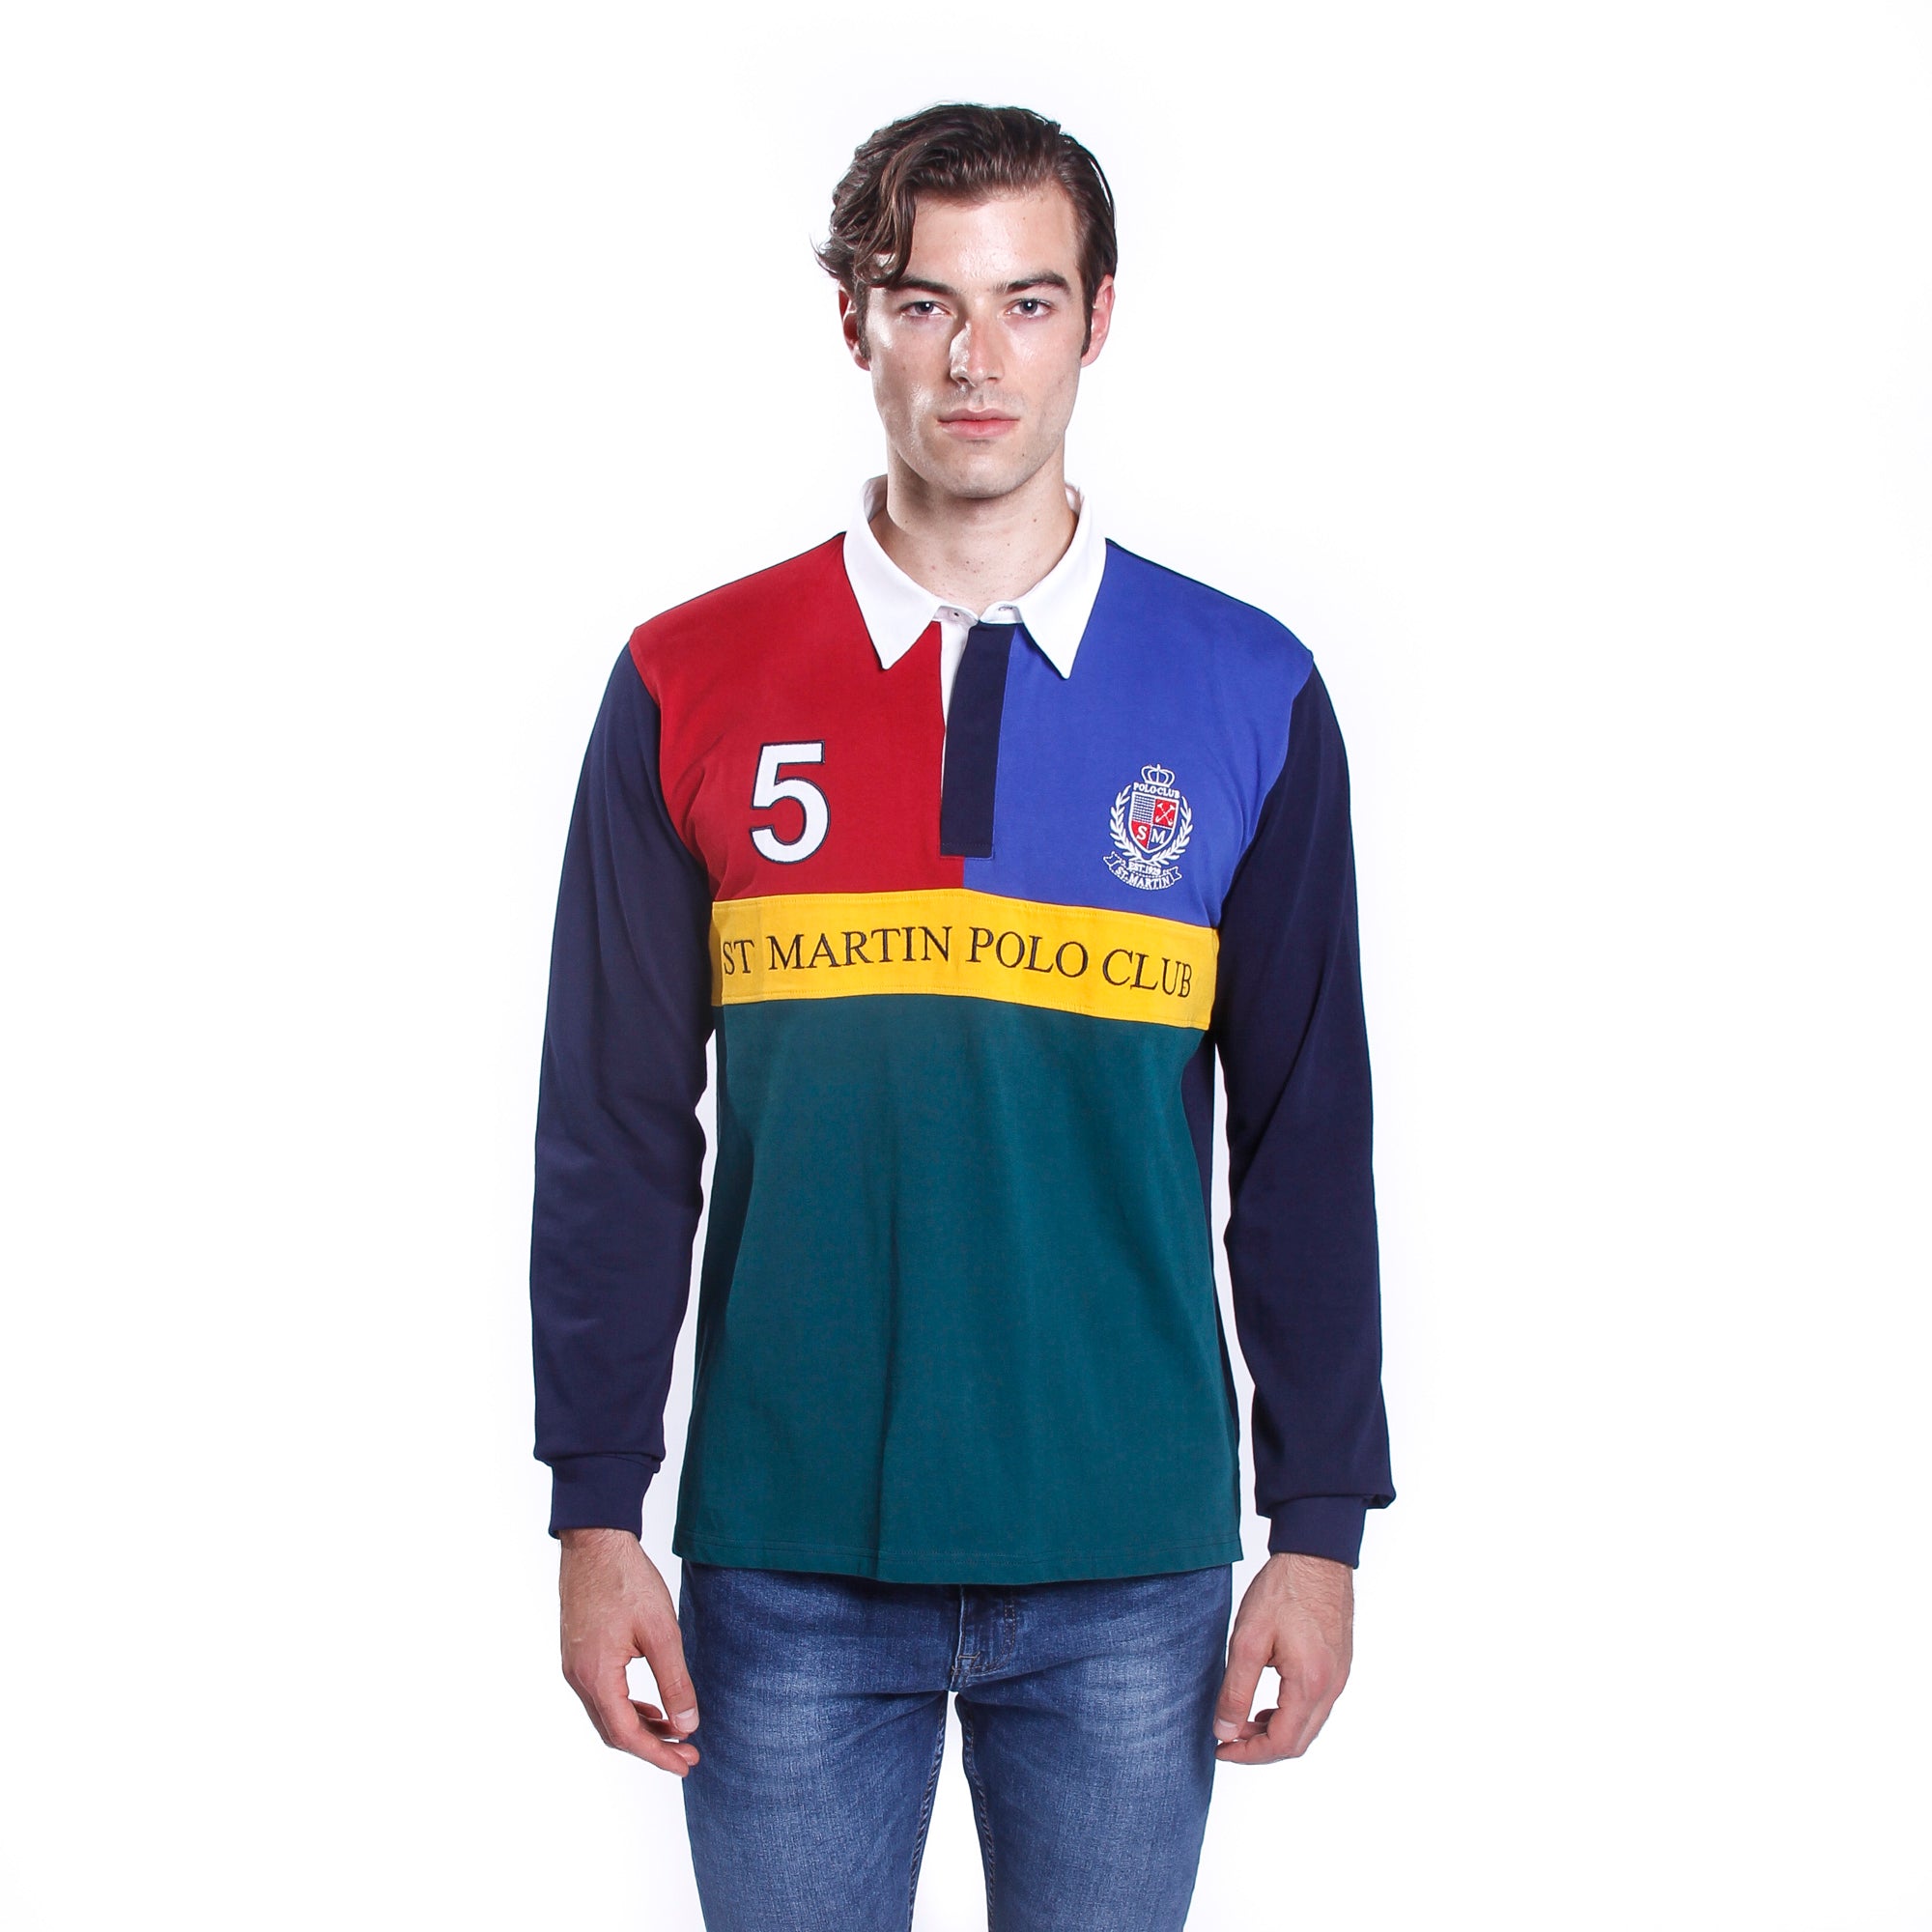 Multicolor jersey polo shirt